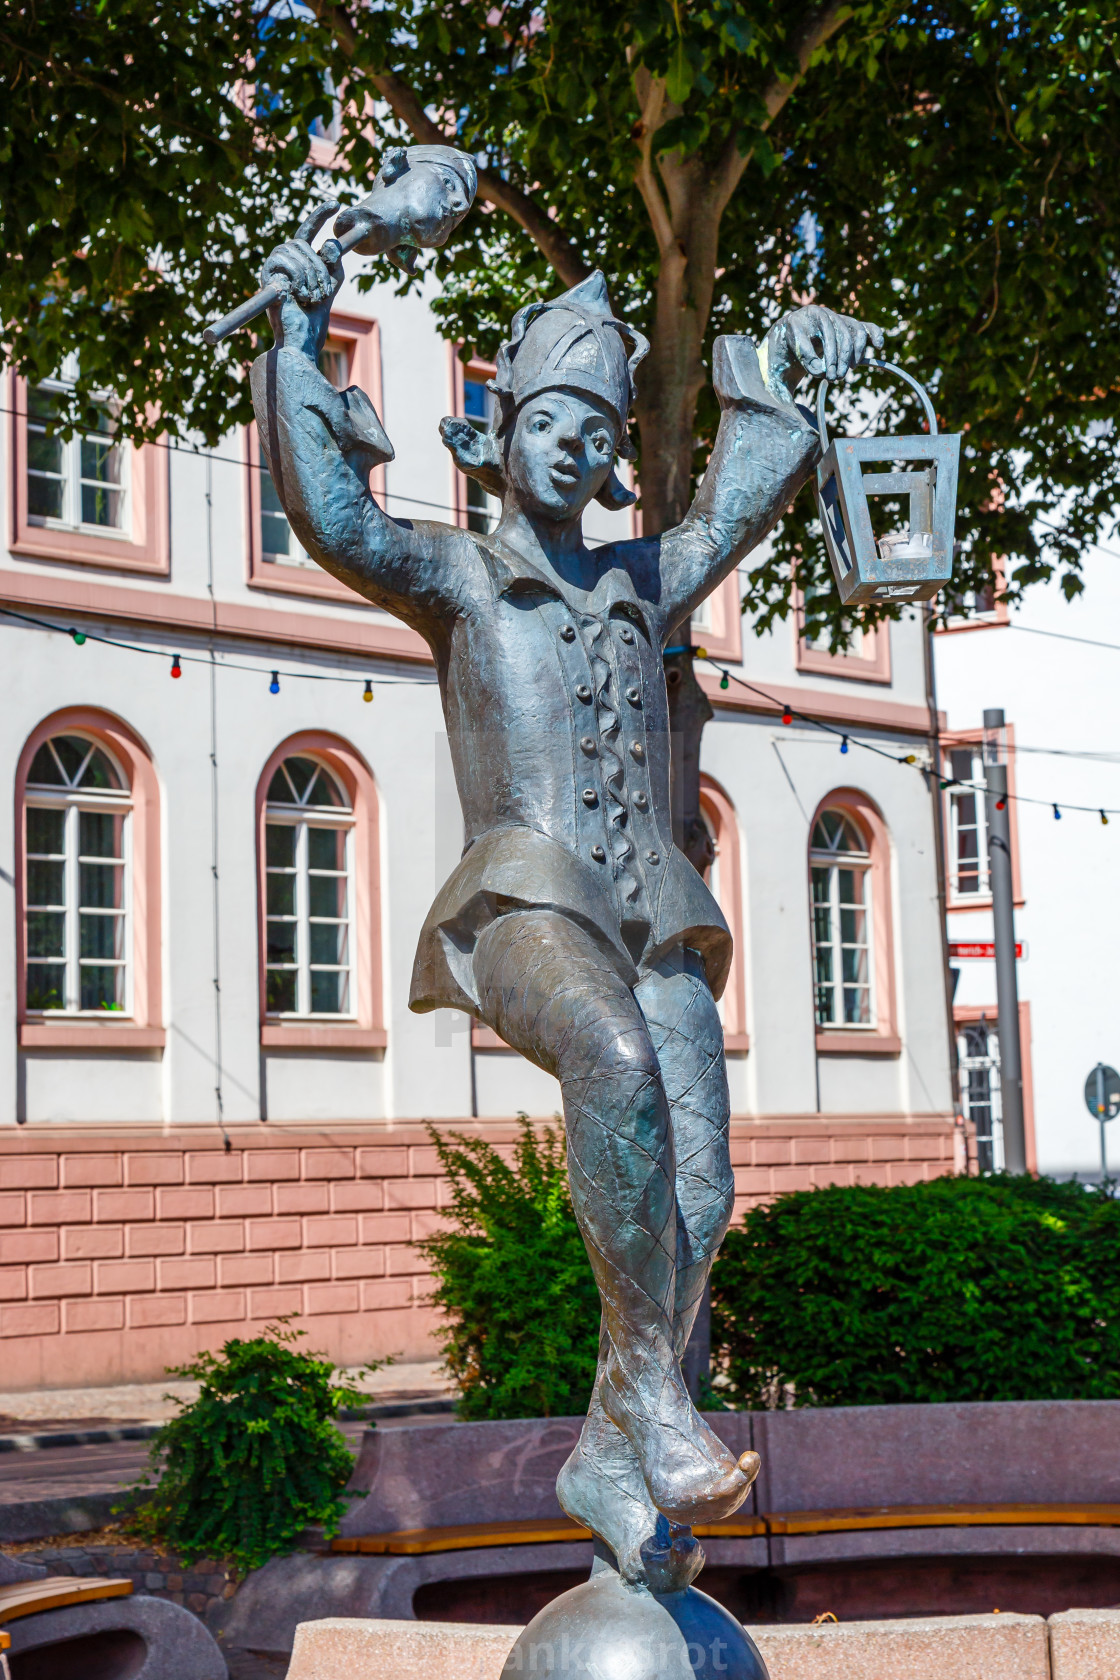 Clown bronze statue